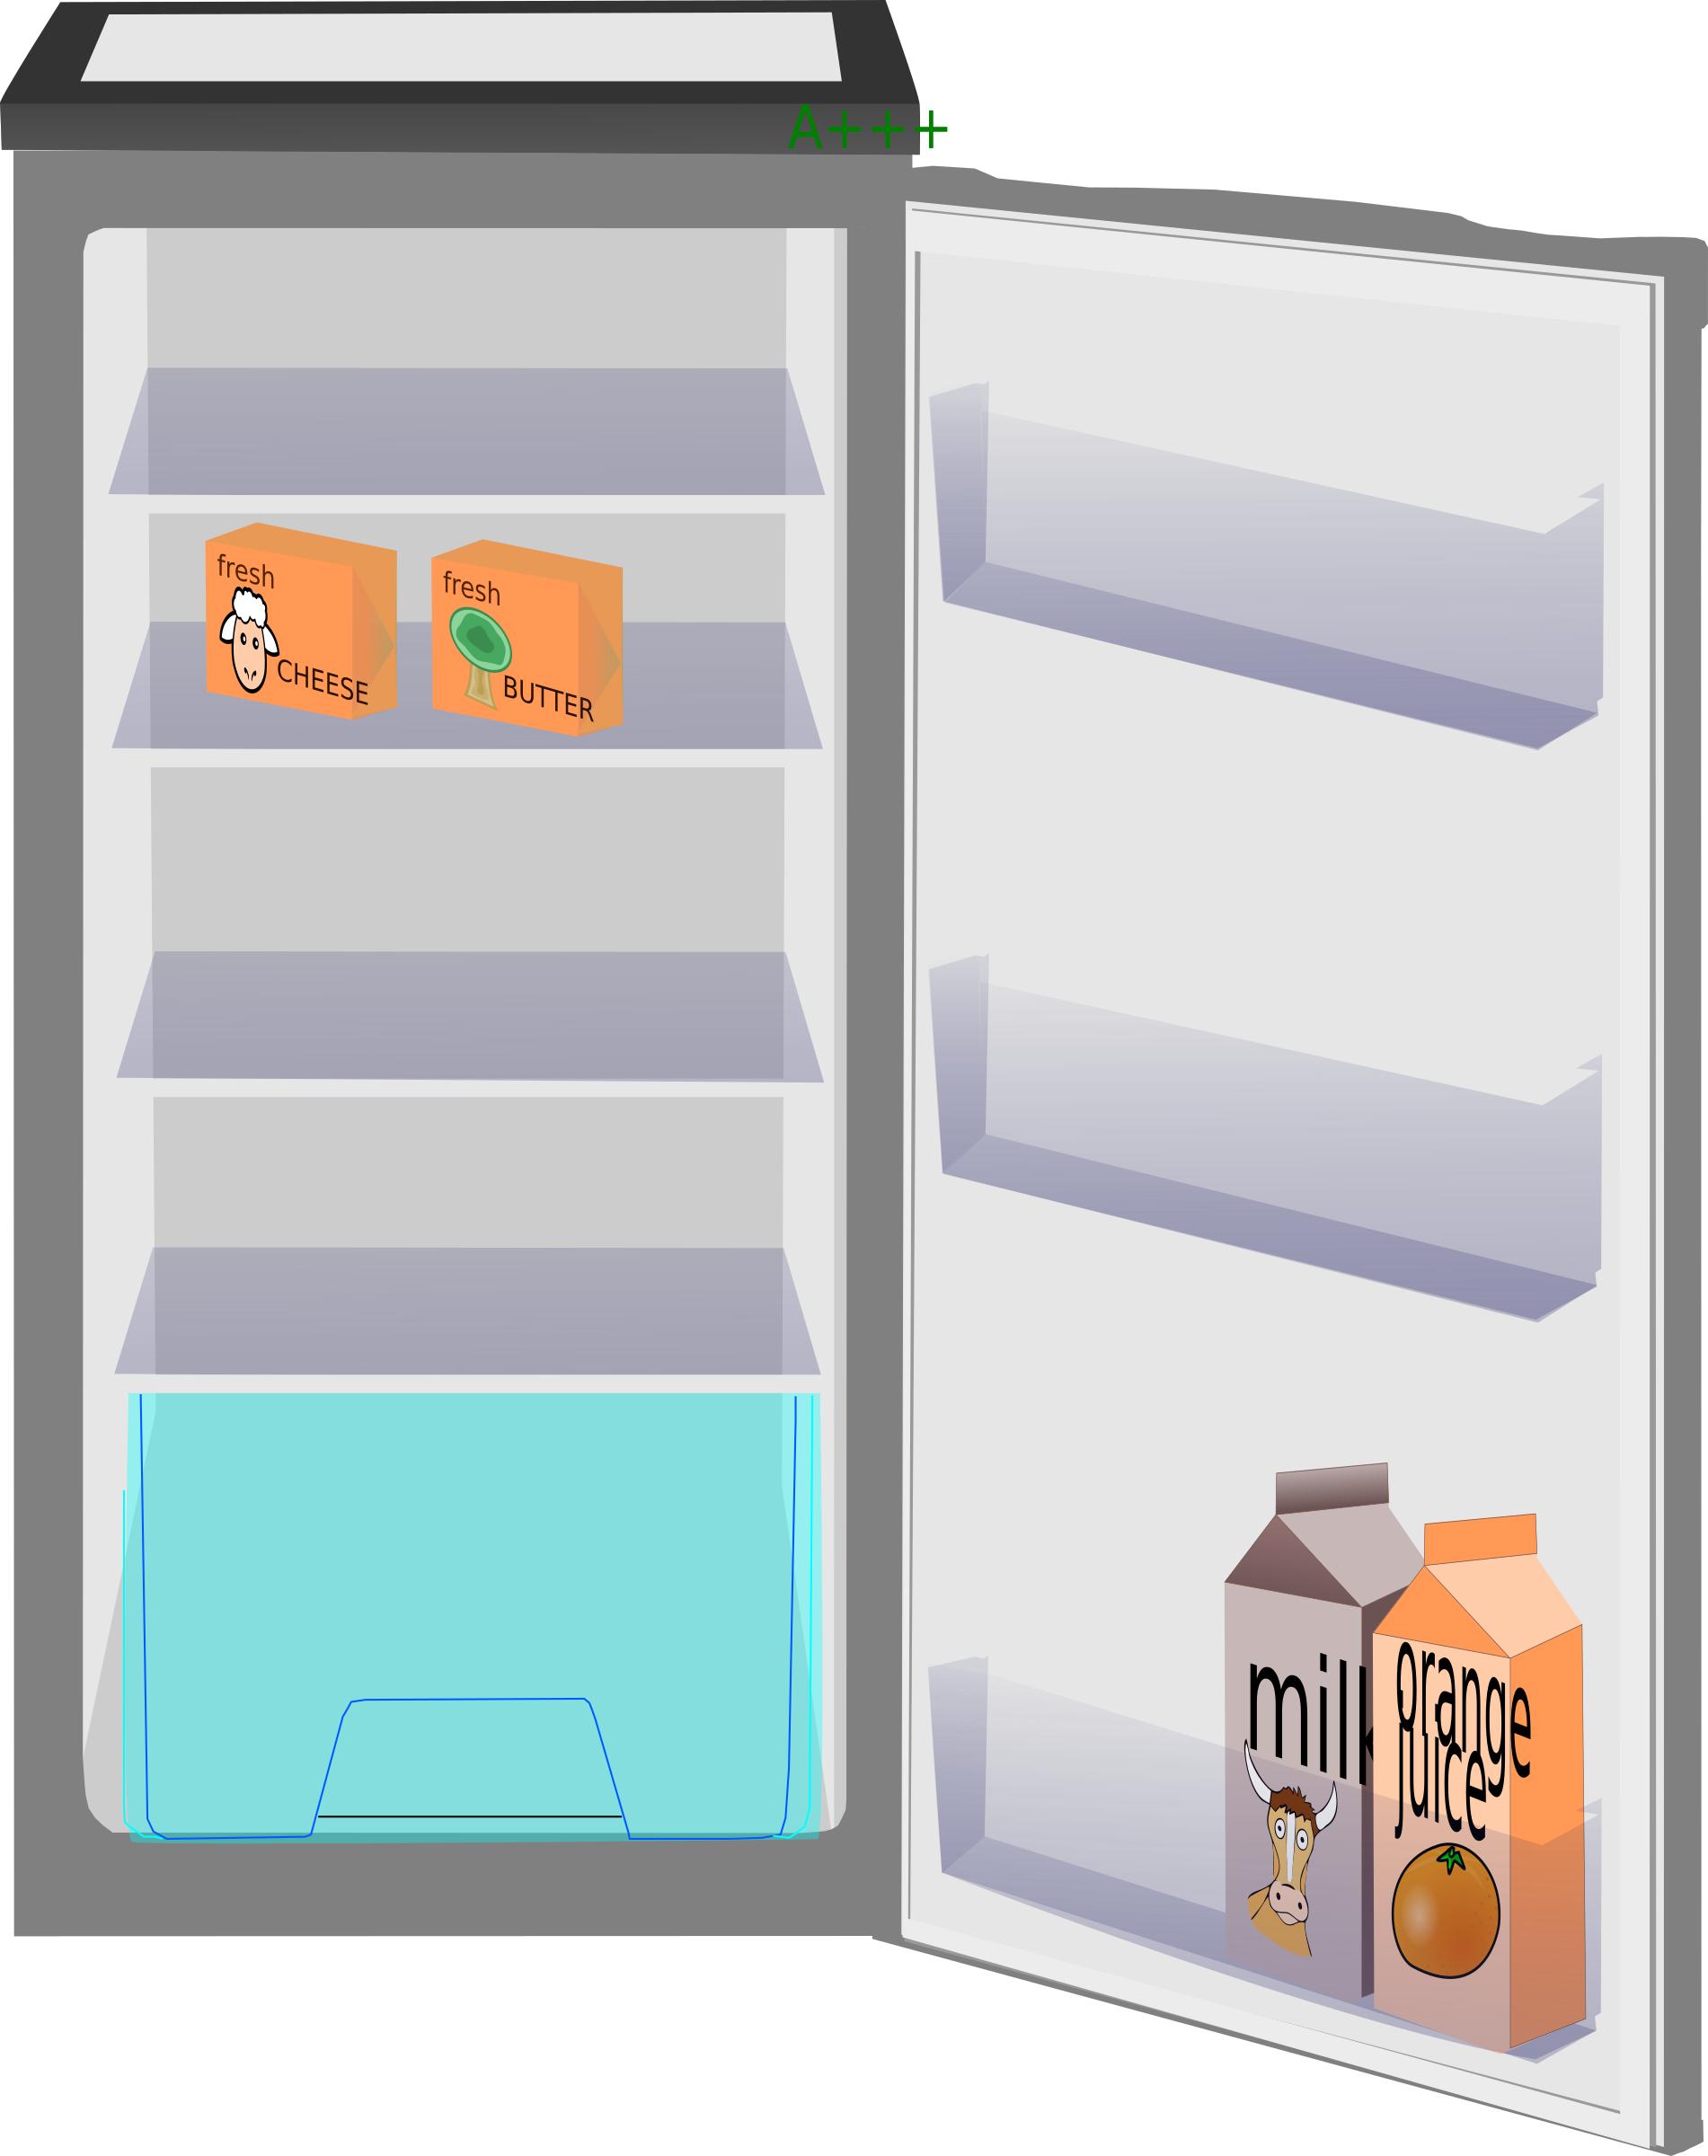 Full fridge PNG icons